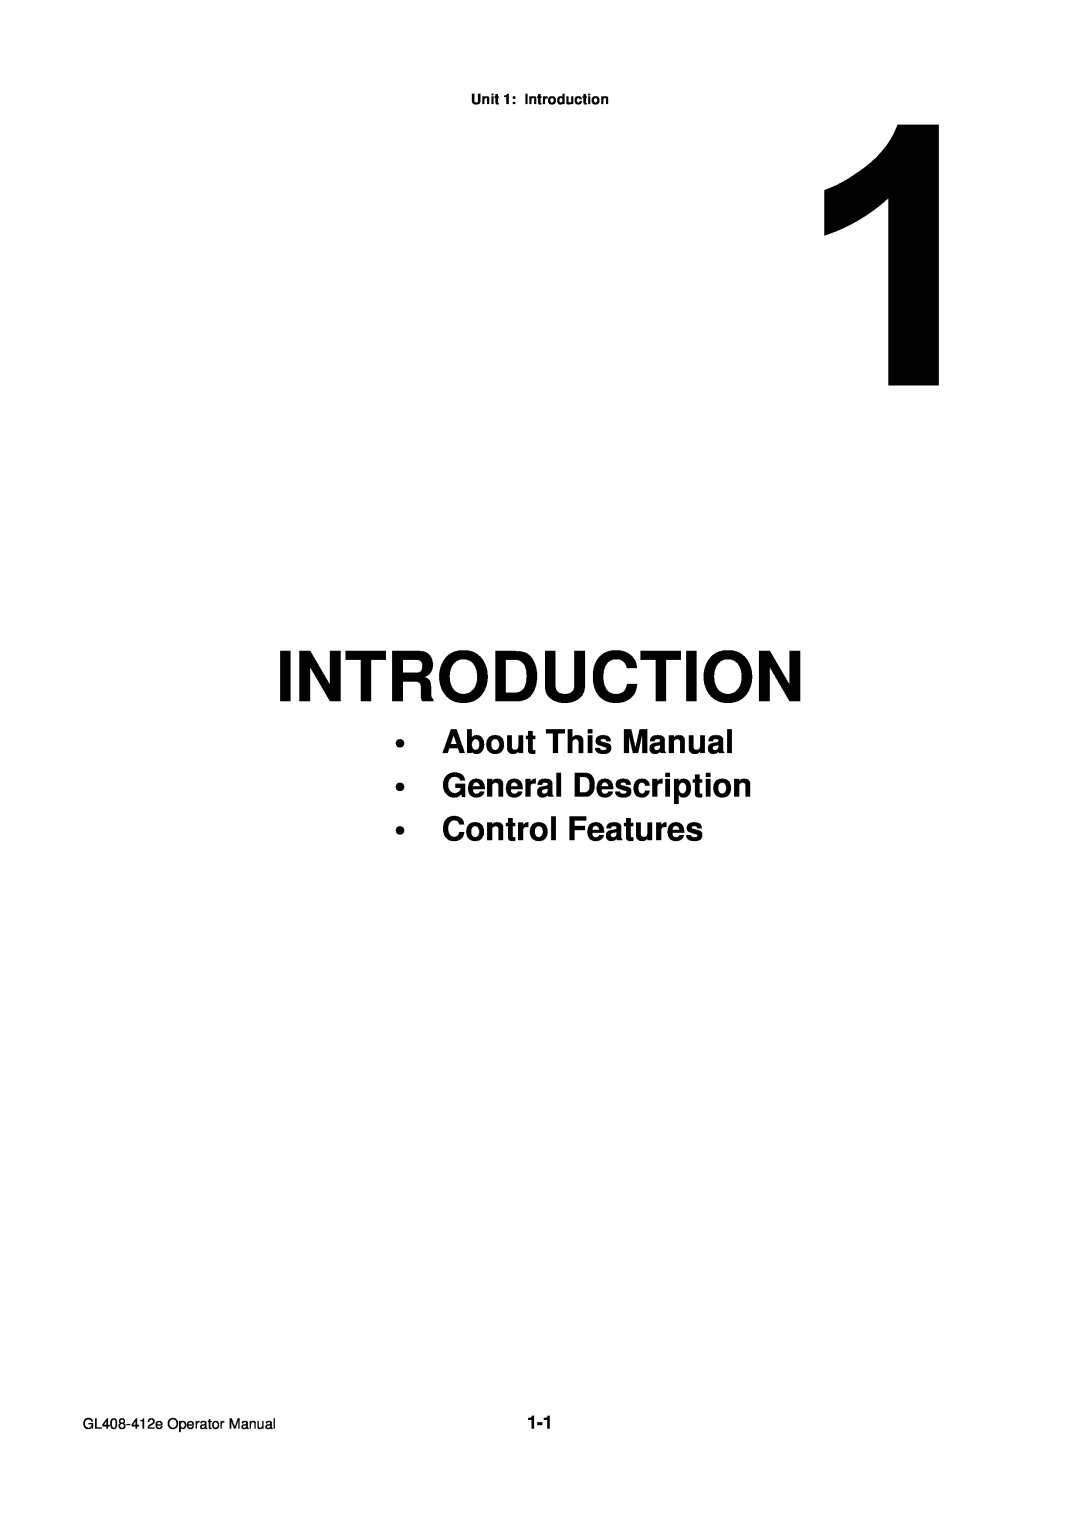 SATO GL4XXE manual About This Manual General Description Control Features, Unit 1 Introduction 